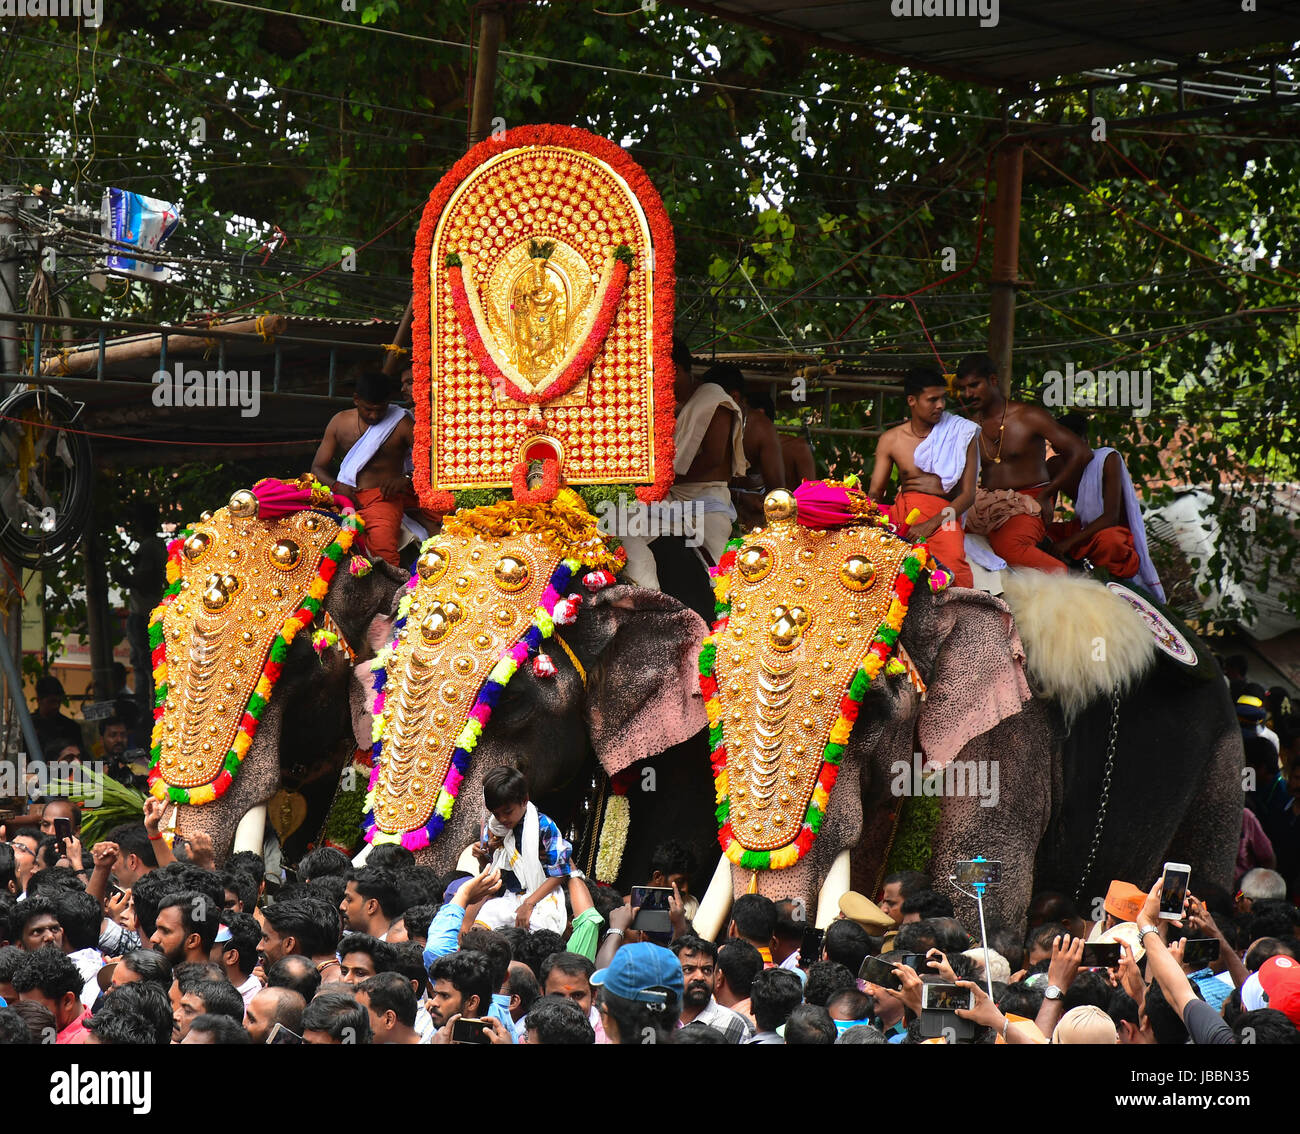 Stock Images Hinduism in Kerala - Thrissur pooram, Thrissur, Kerala, India Stock Photo